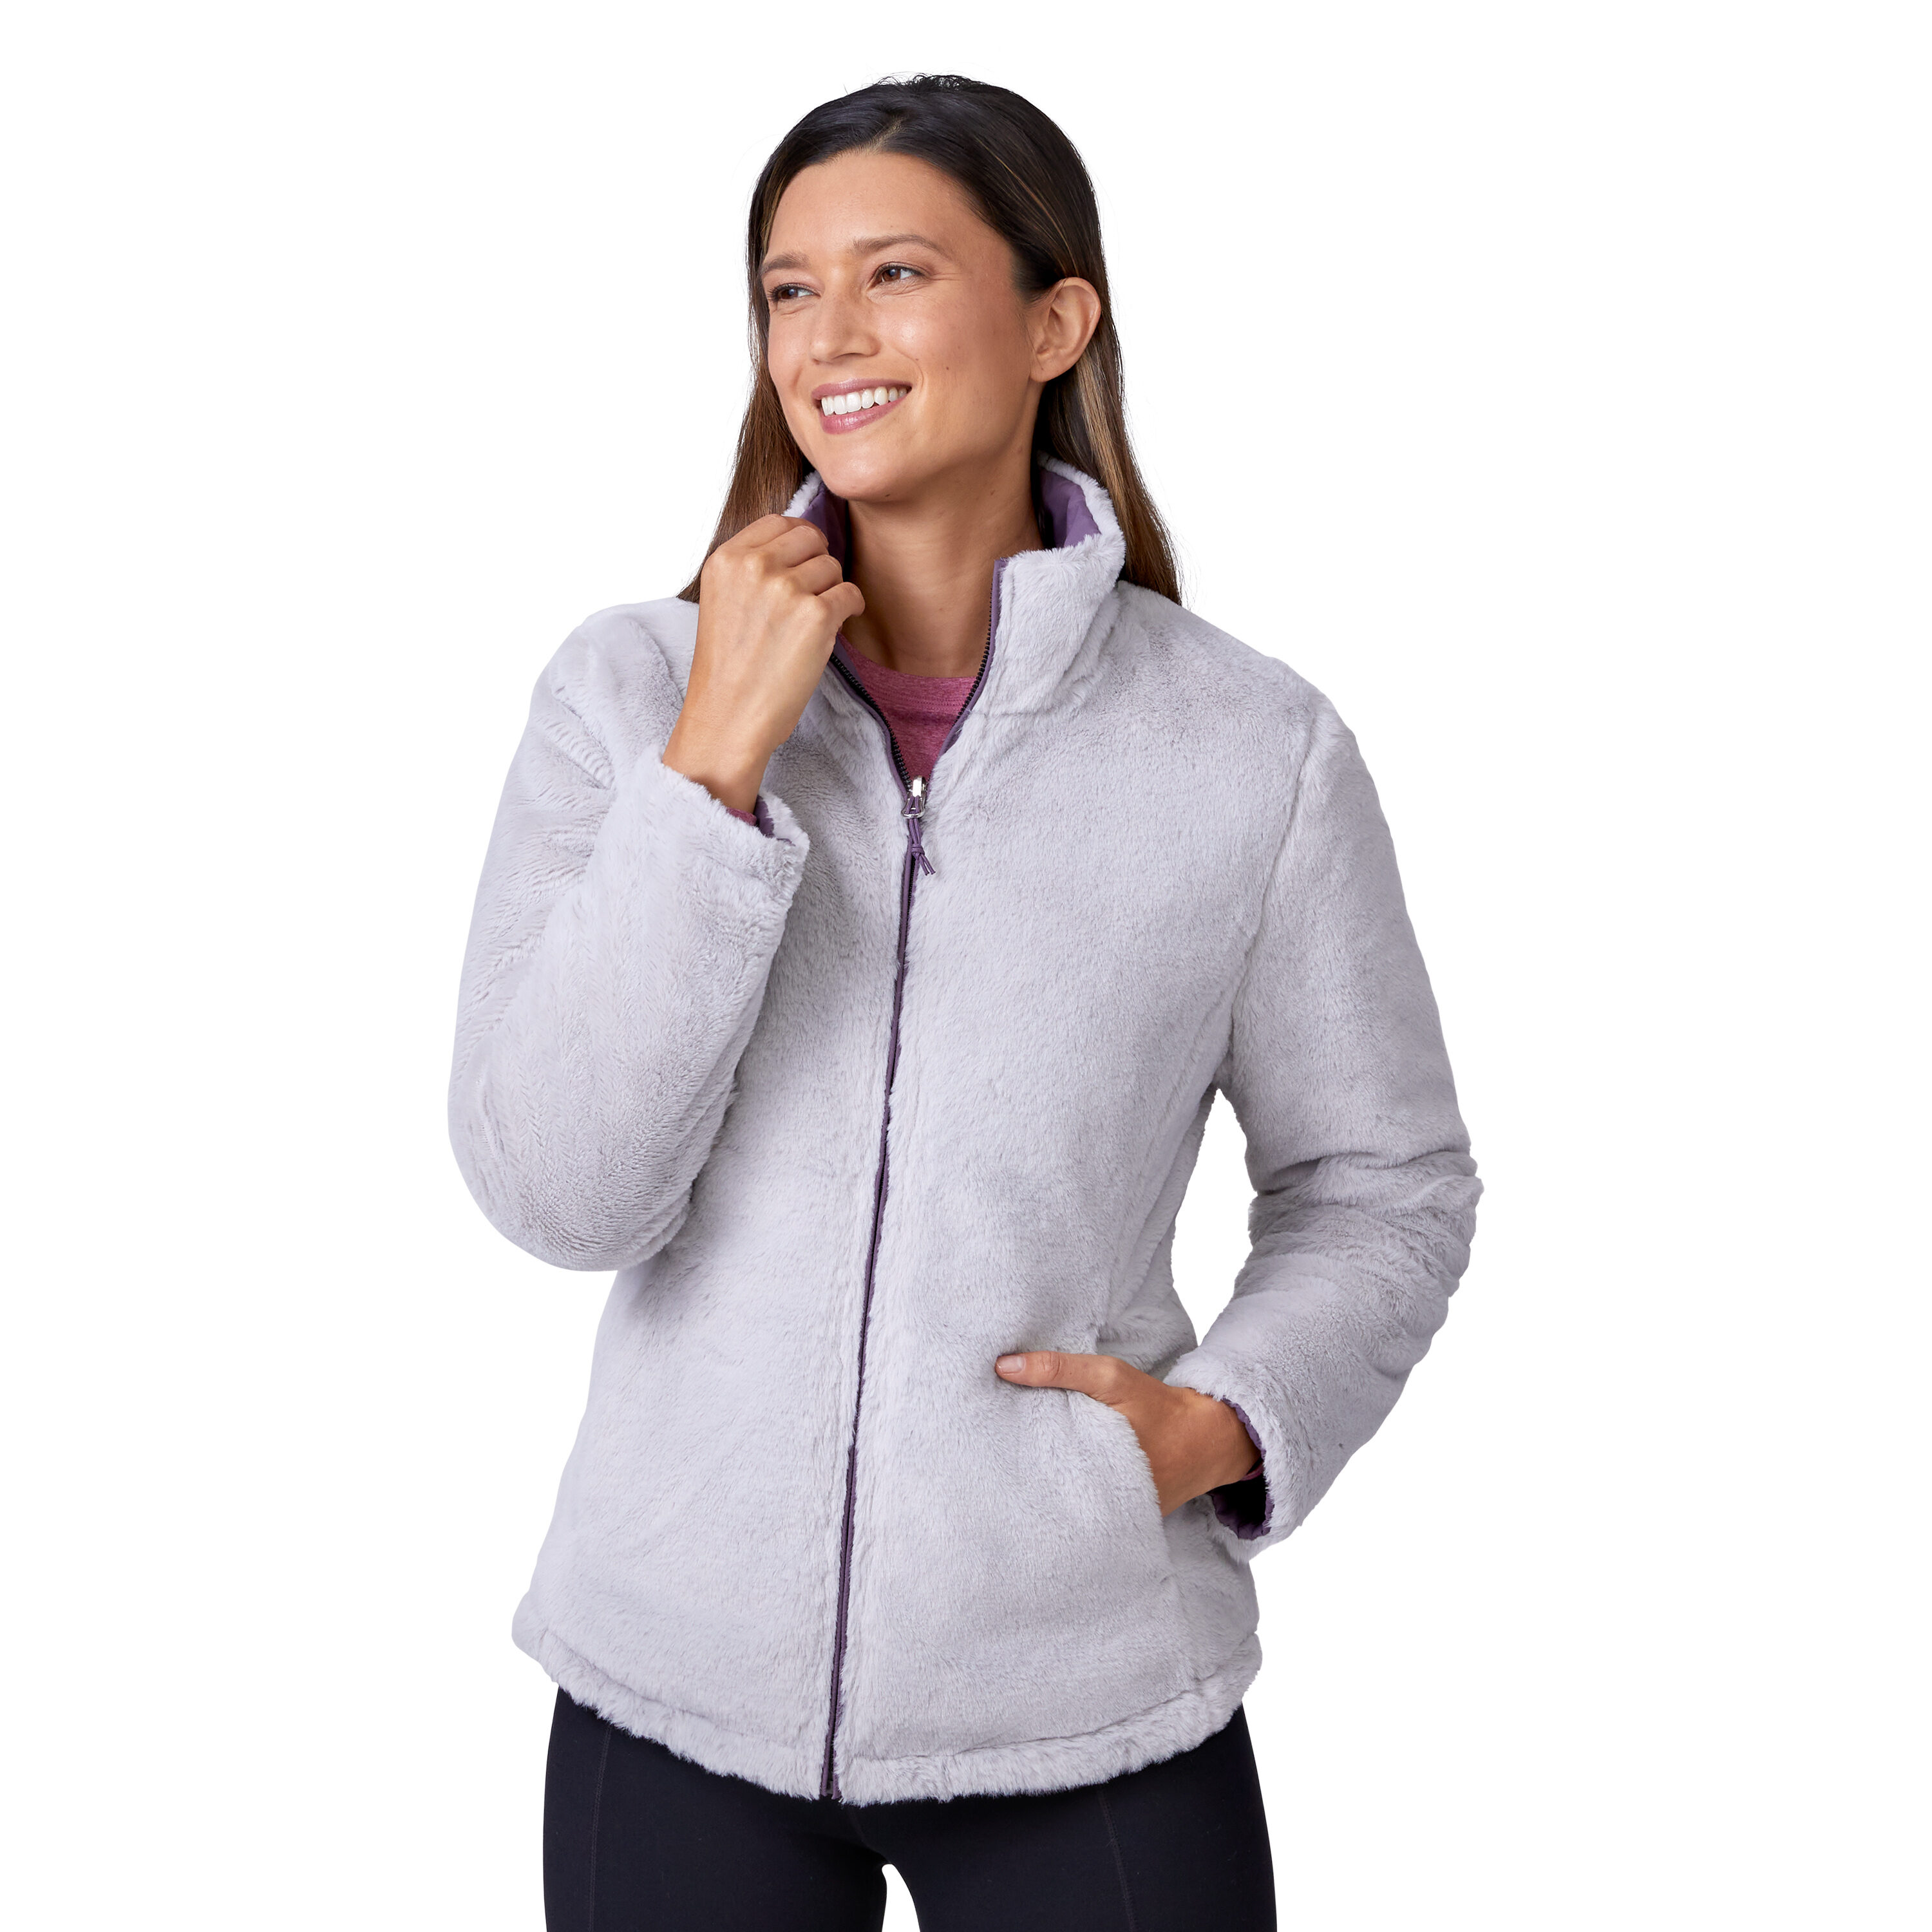 Bestform womens Women's Casual Value Jacquard Fleece Lined